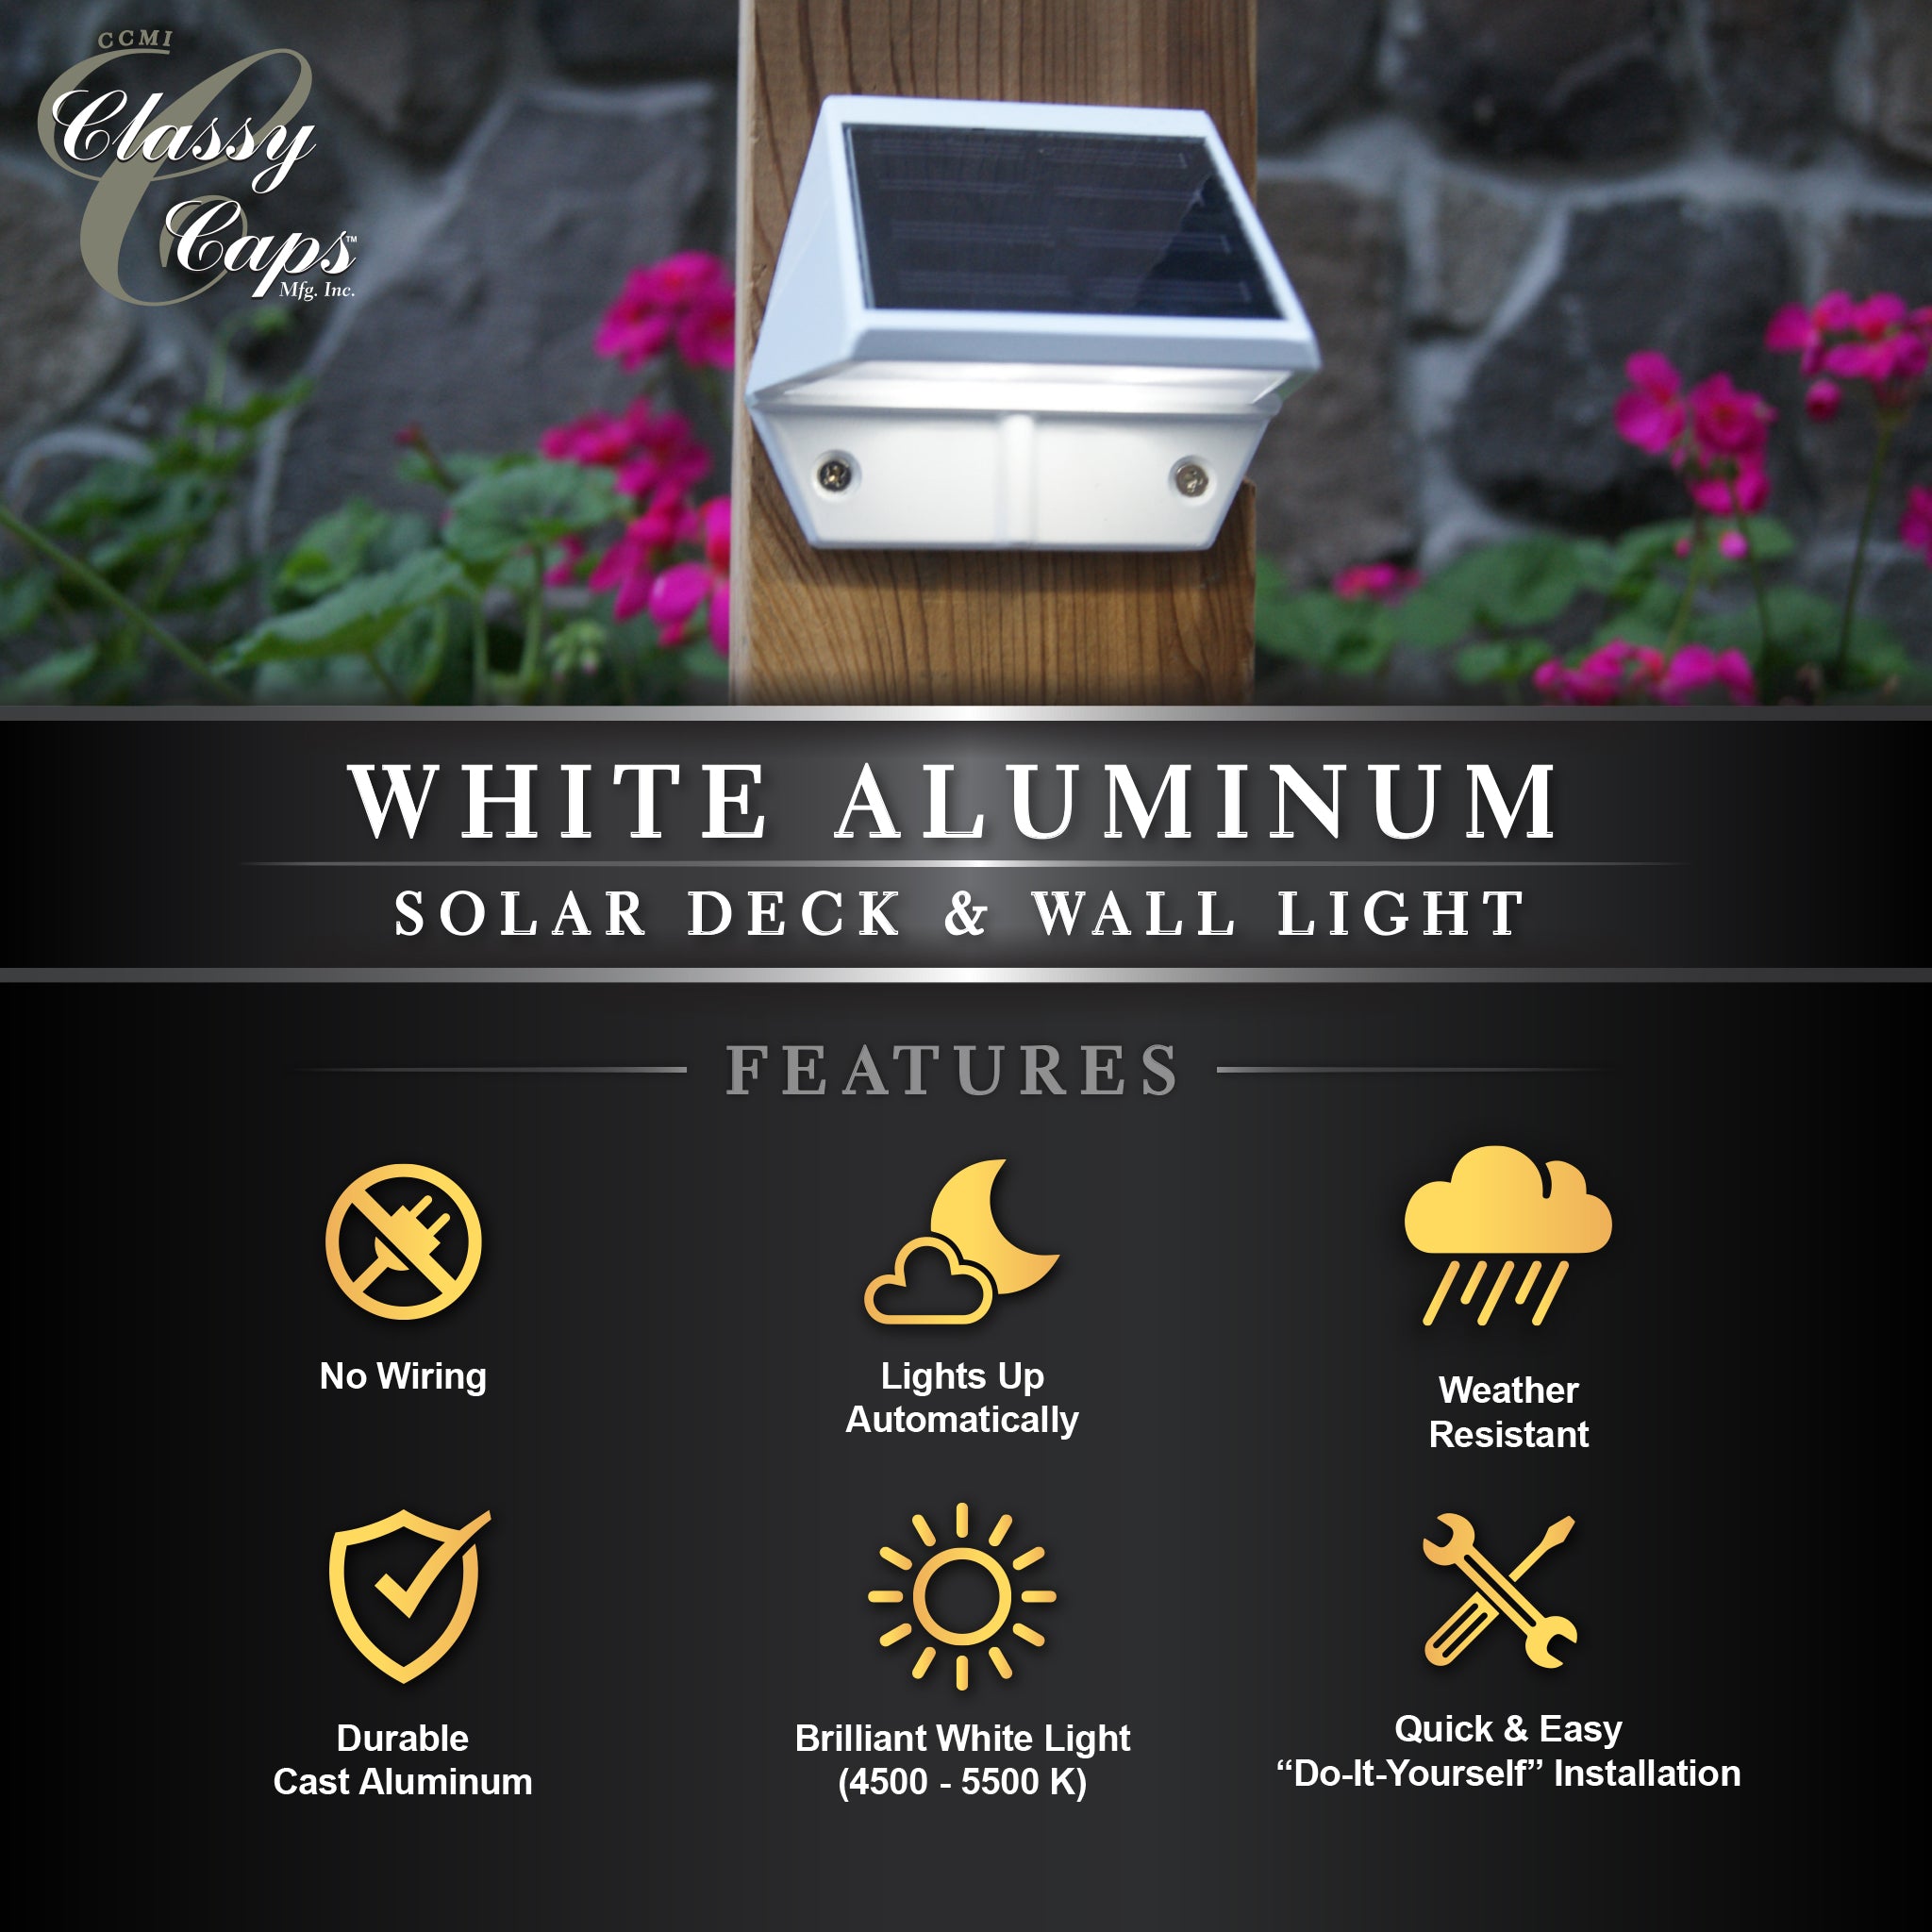 White Aluminum Deck & Wall Light